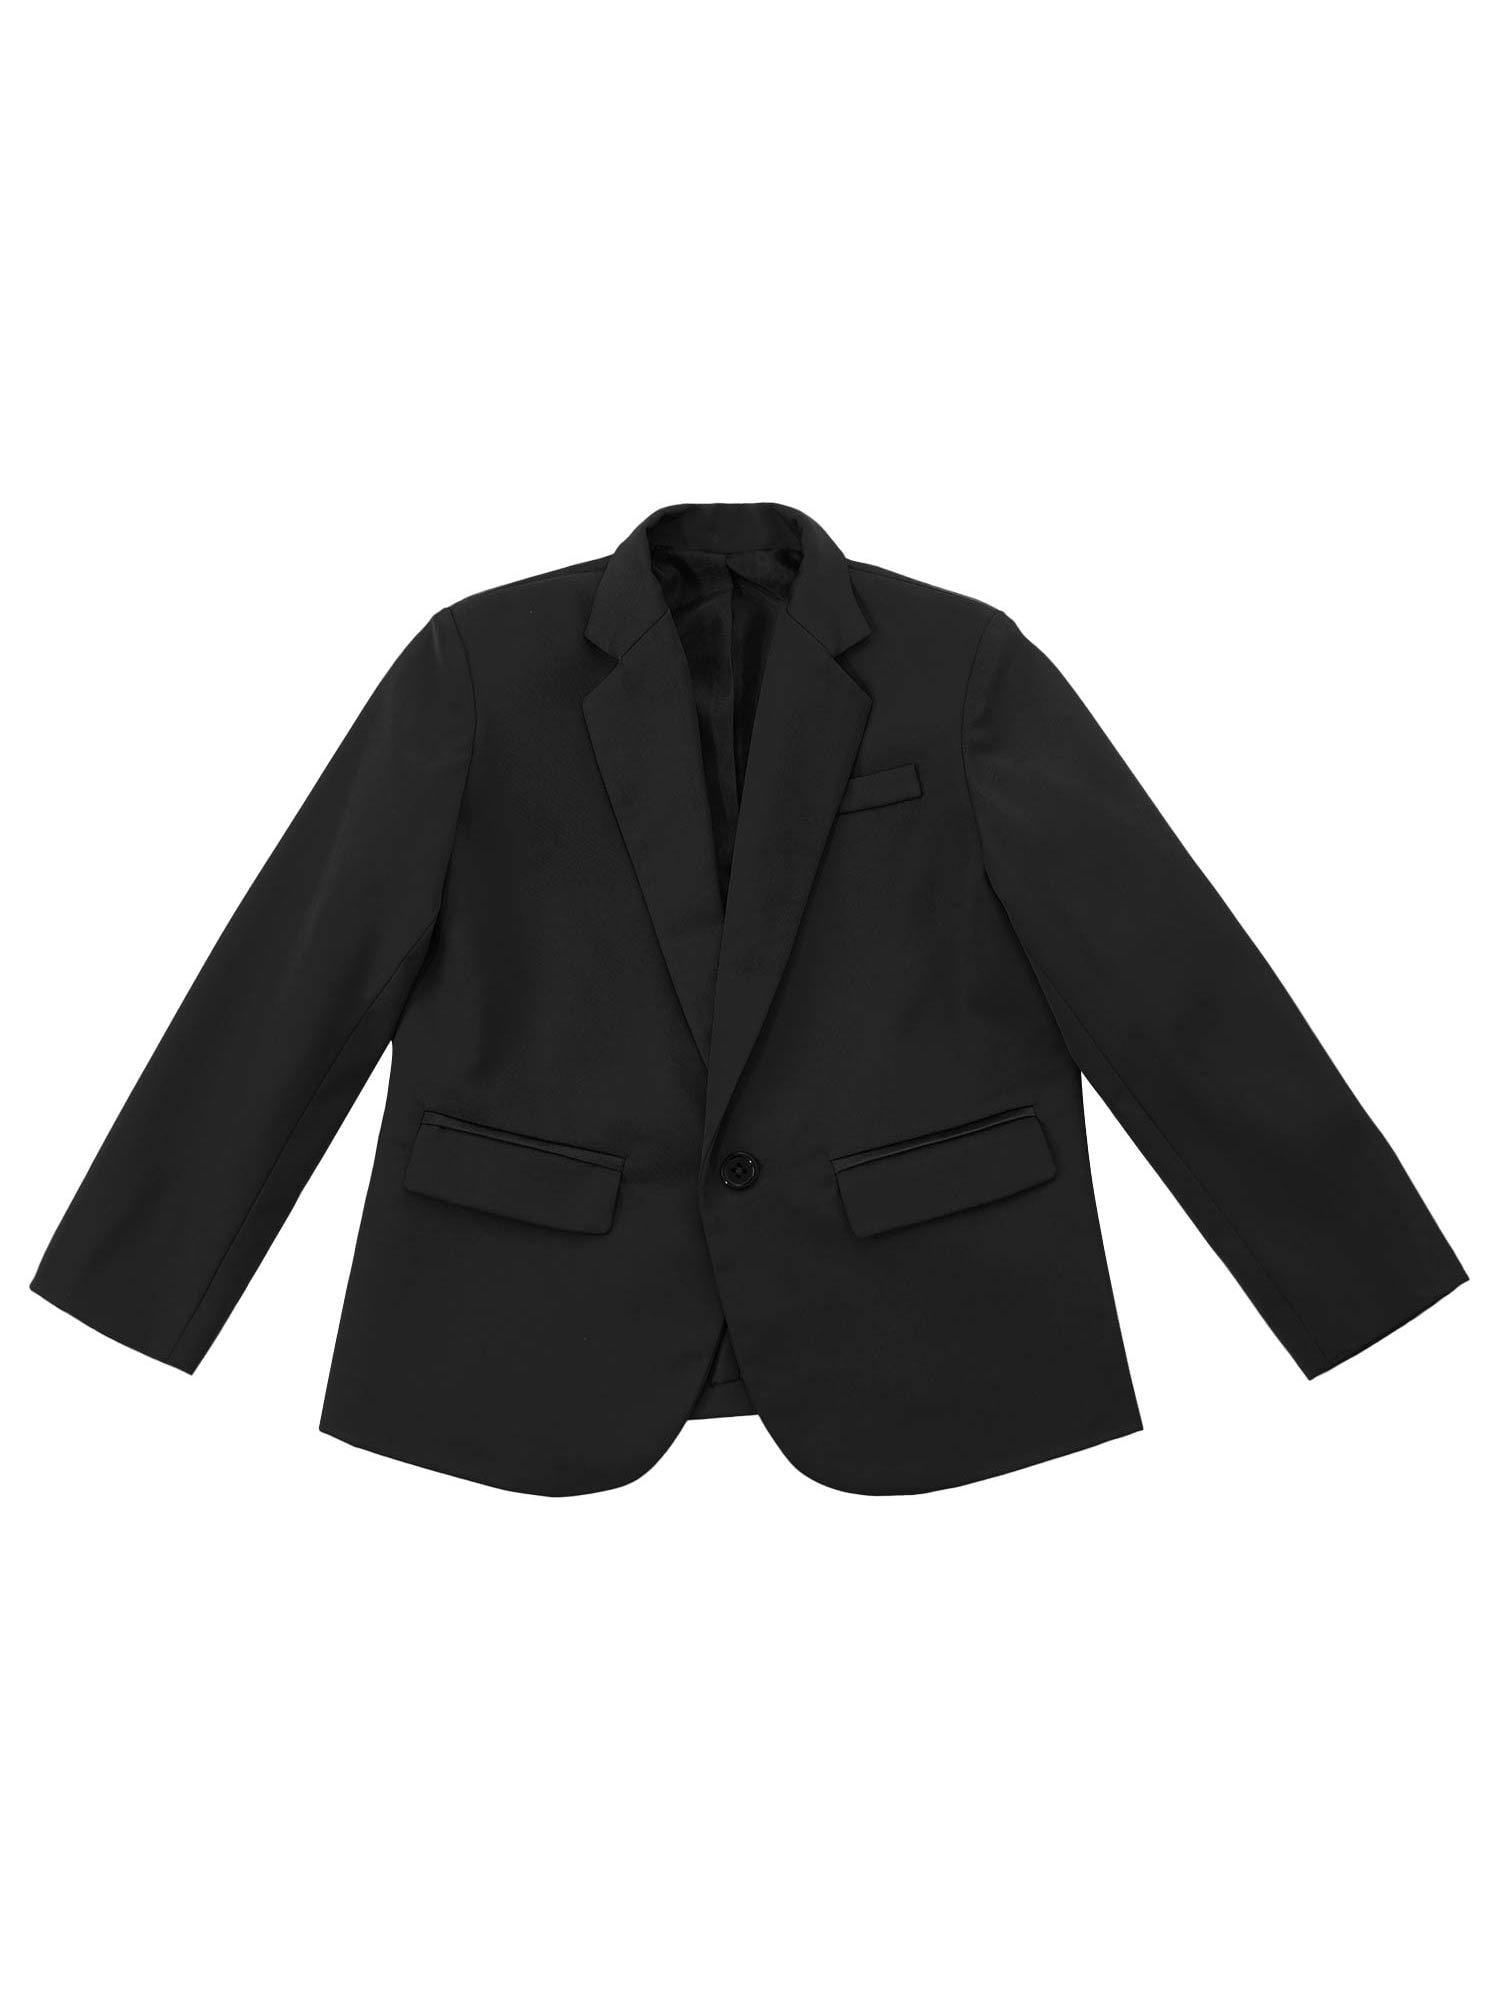 Kids Boys Suit Jacket Slim Fit One Button Casual Blazer Stage Performance  Coat | eBay